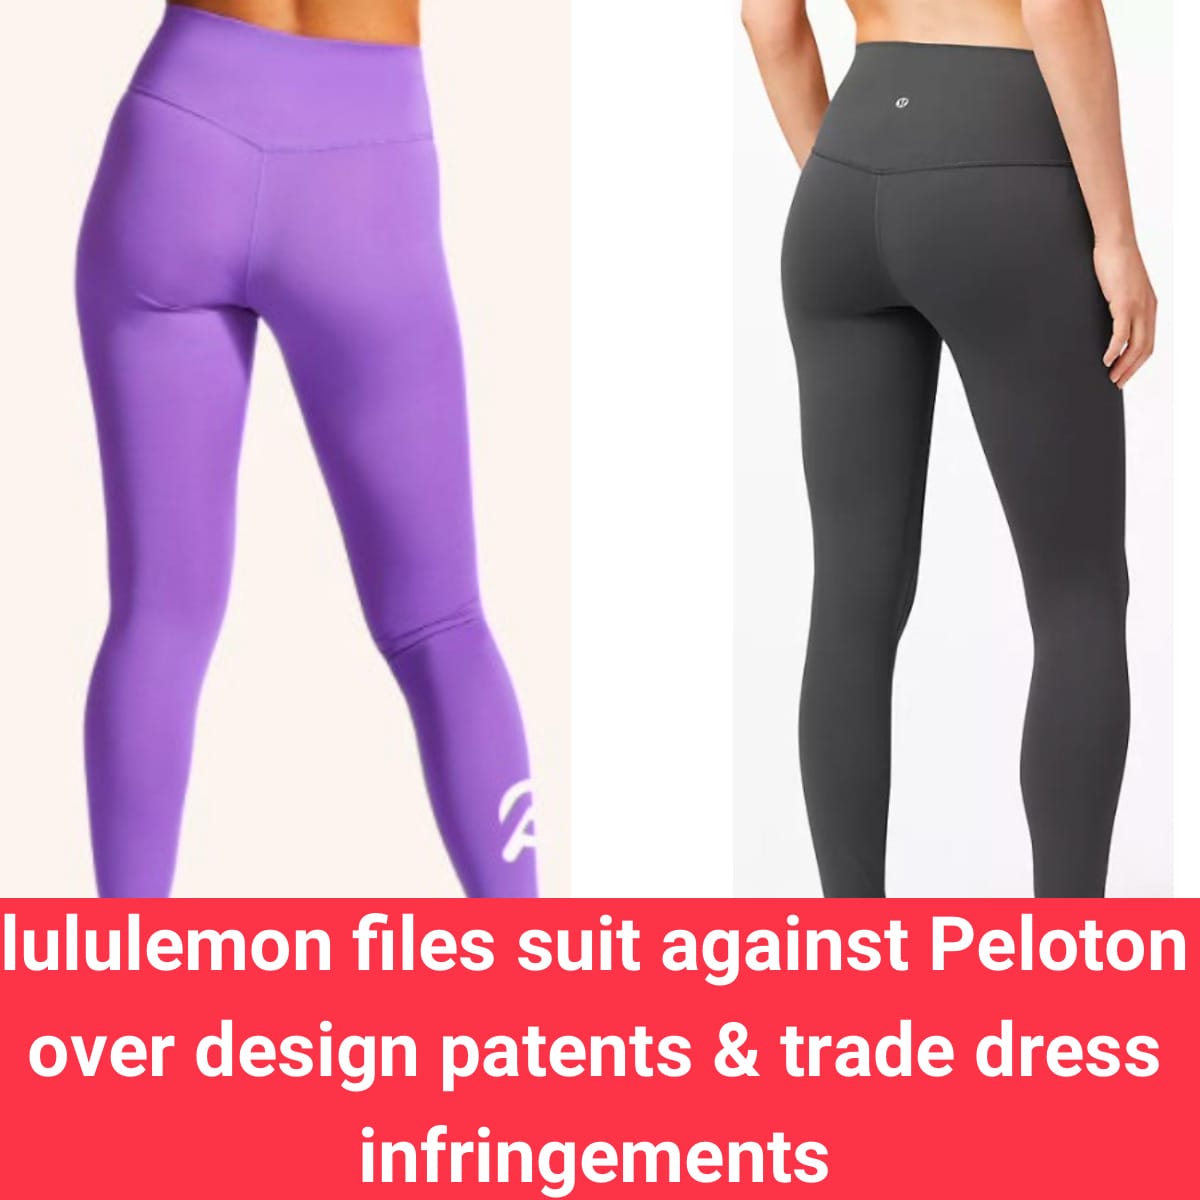 Lululemon fires back after Peloton sues over apparel